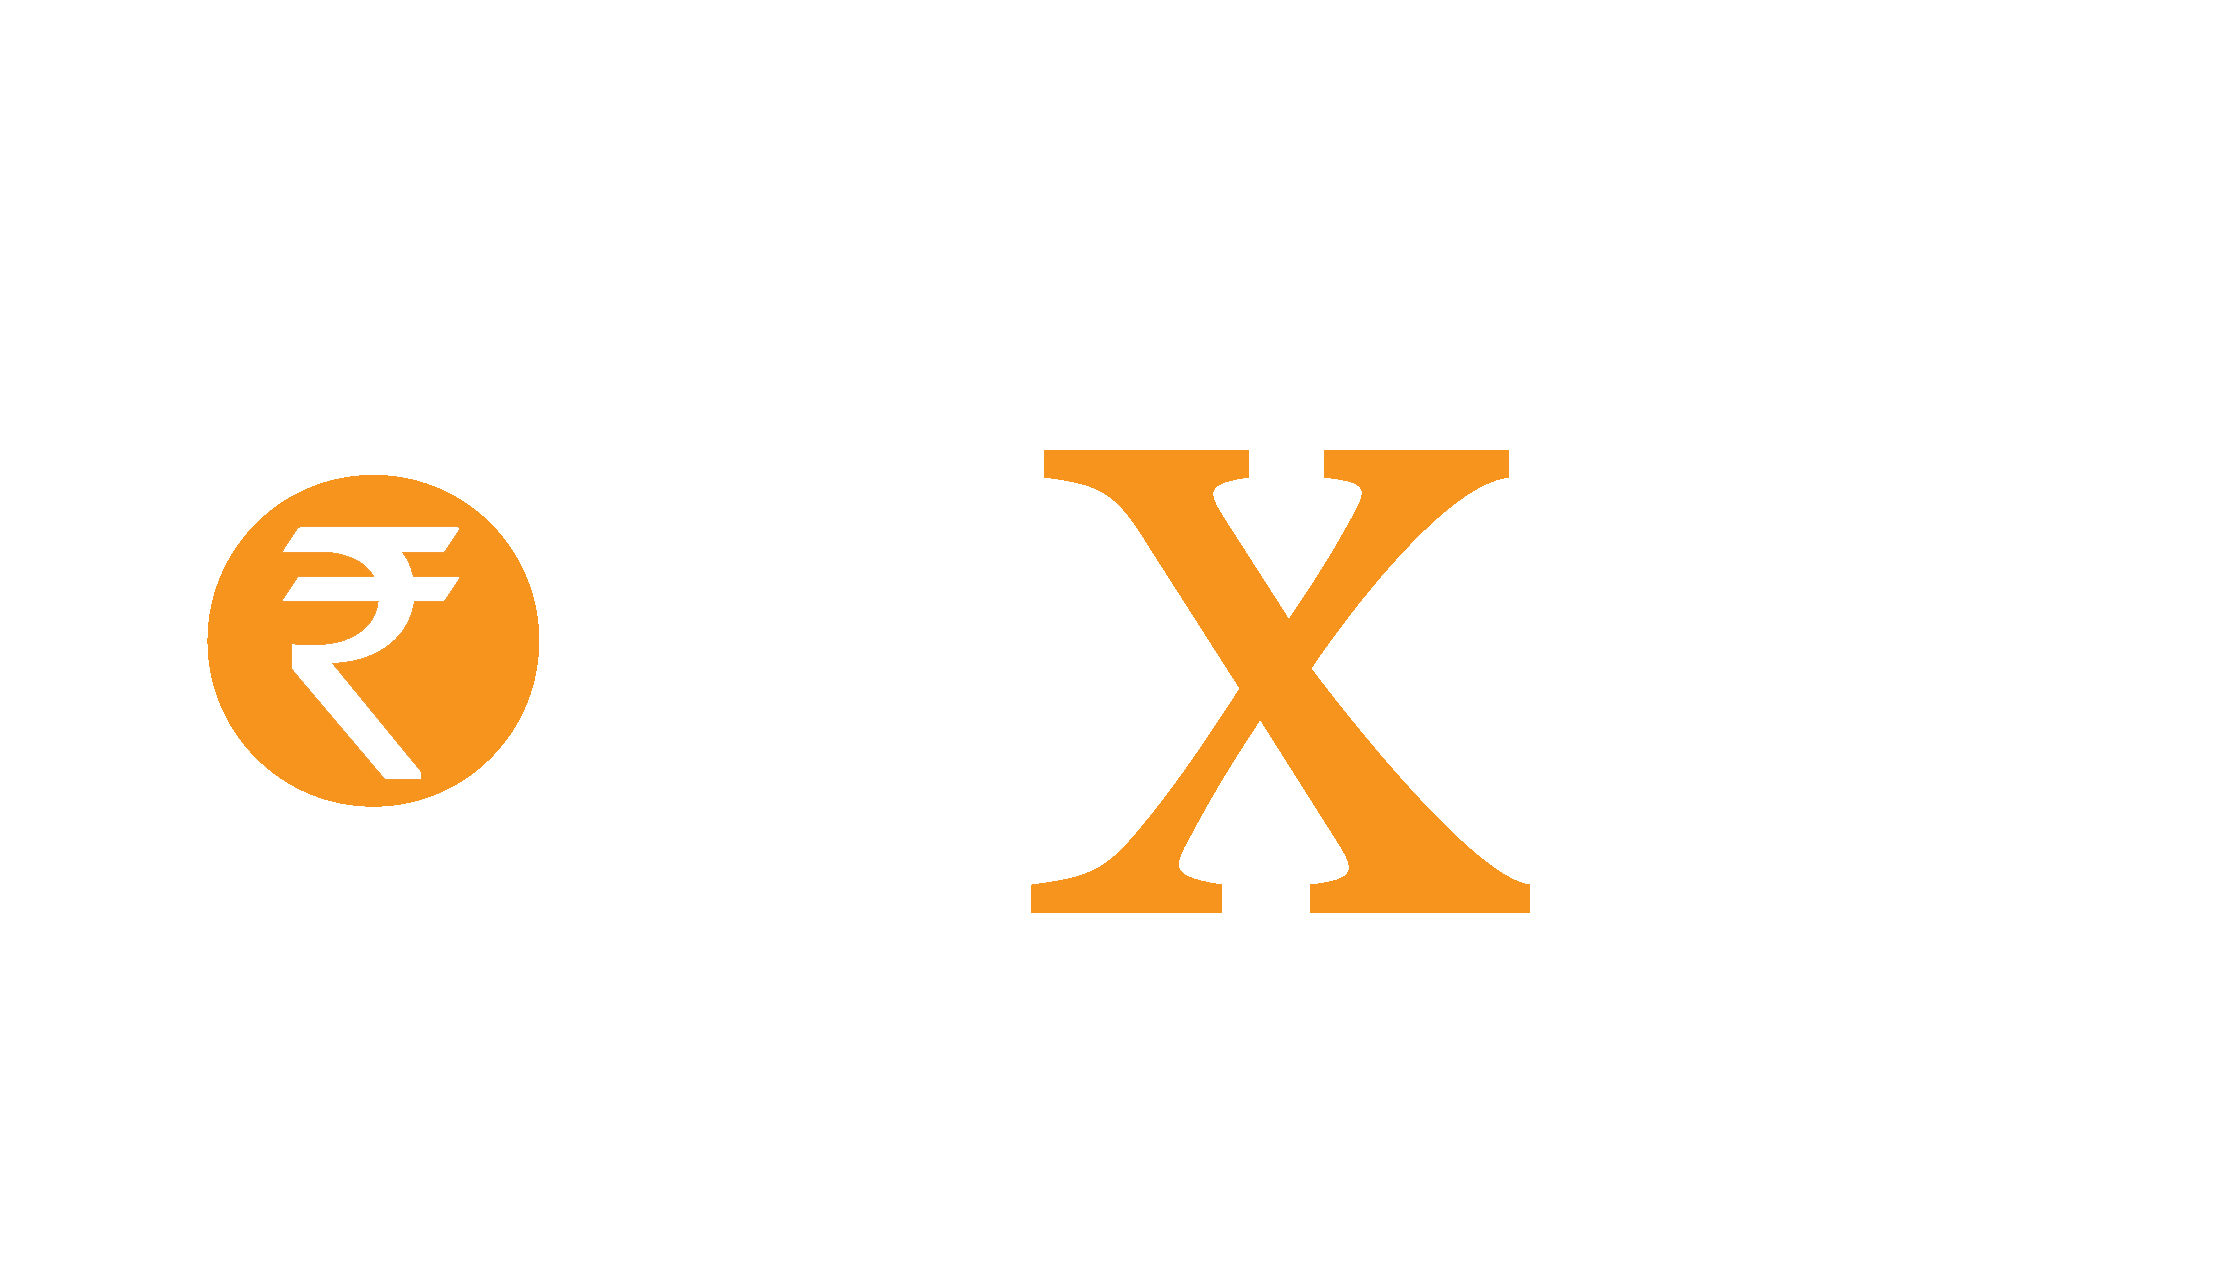 Bix42 Billing Software